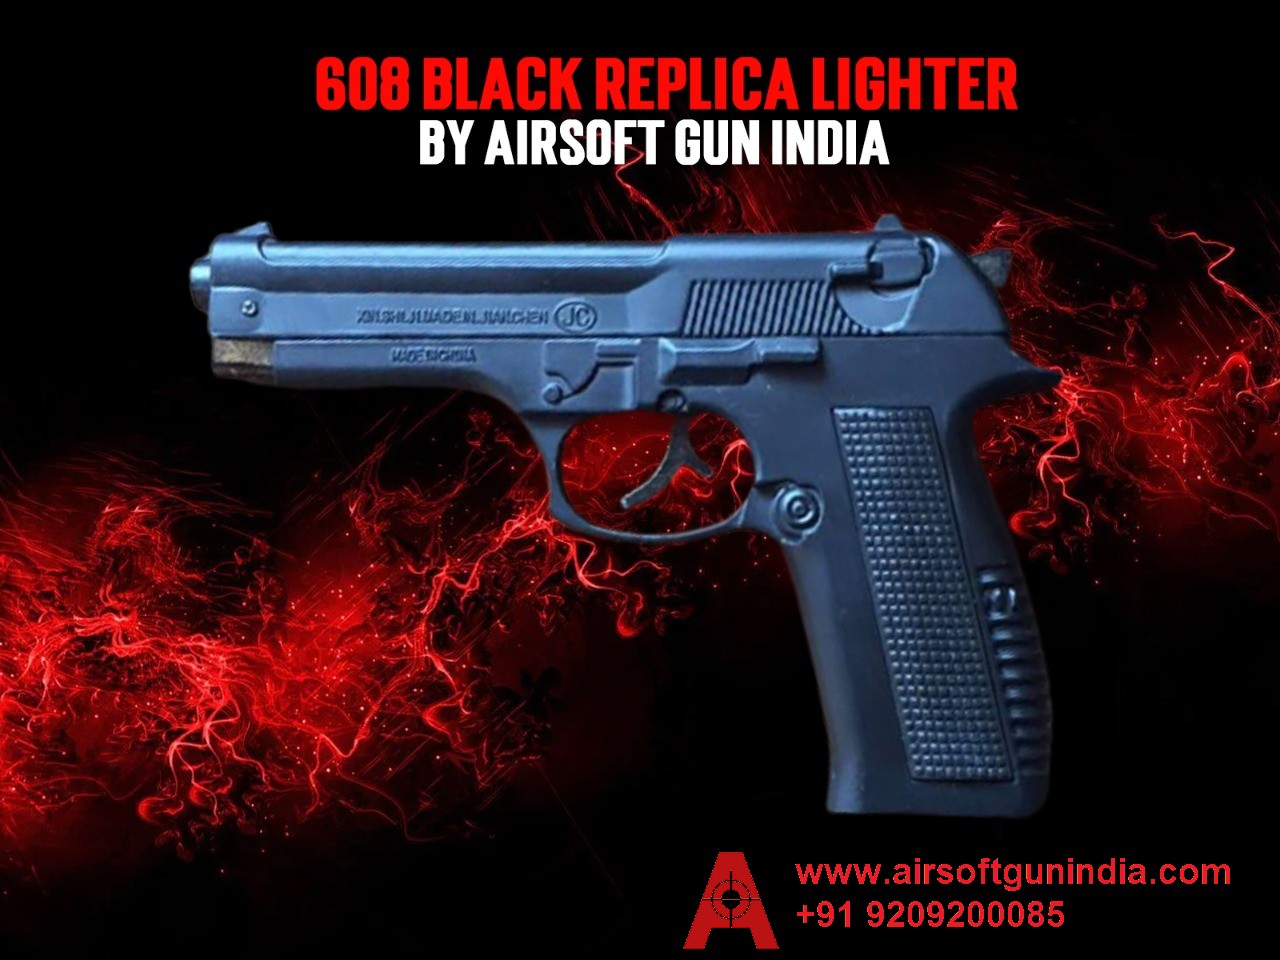 608 BLACK REPLICA LIGHTER BY AIRSOFT GUN INDIA